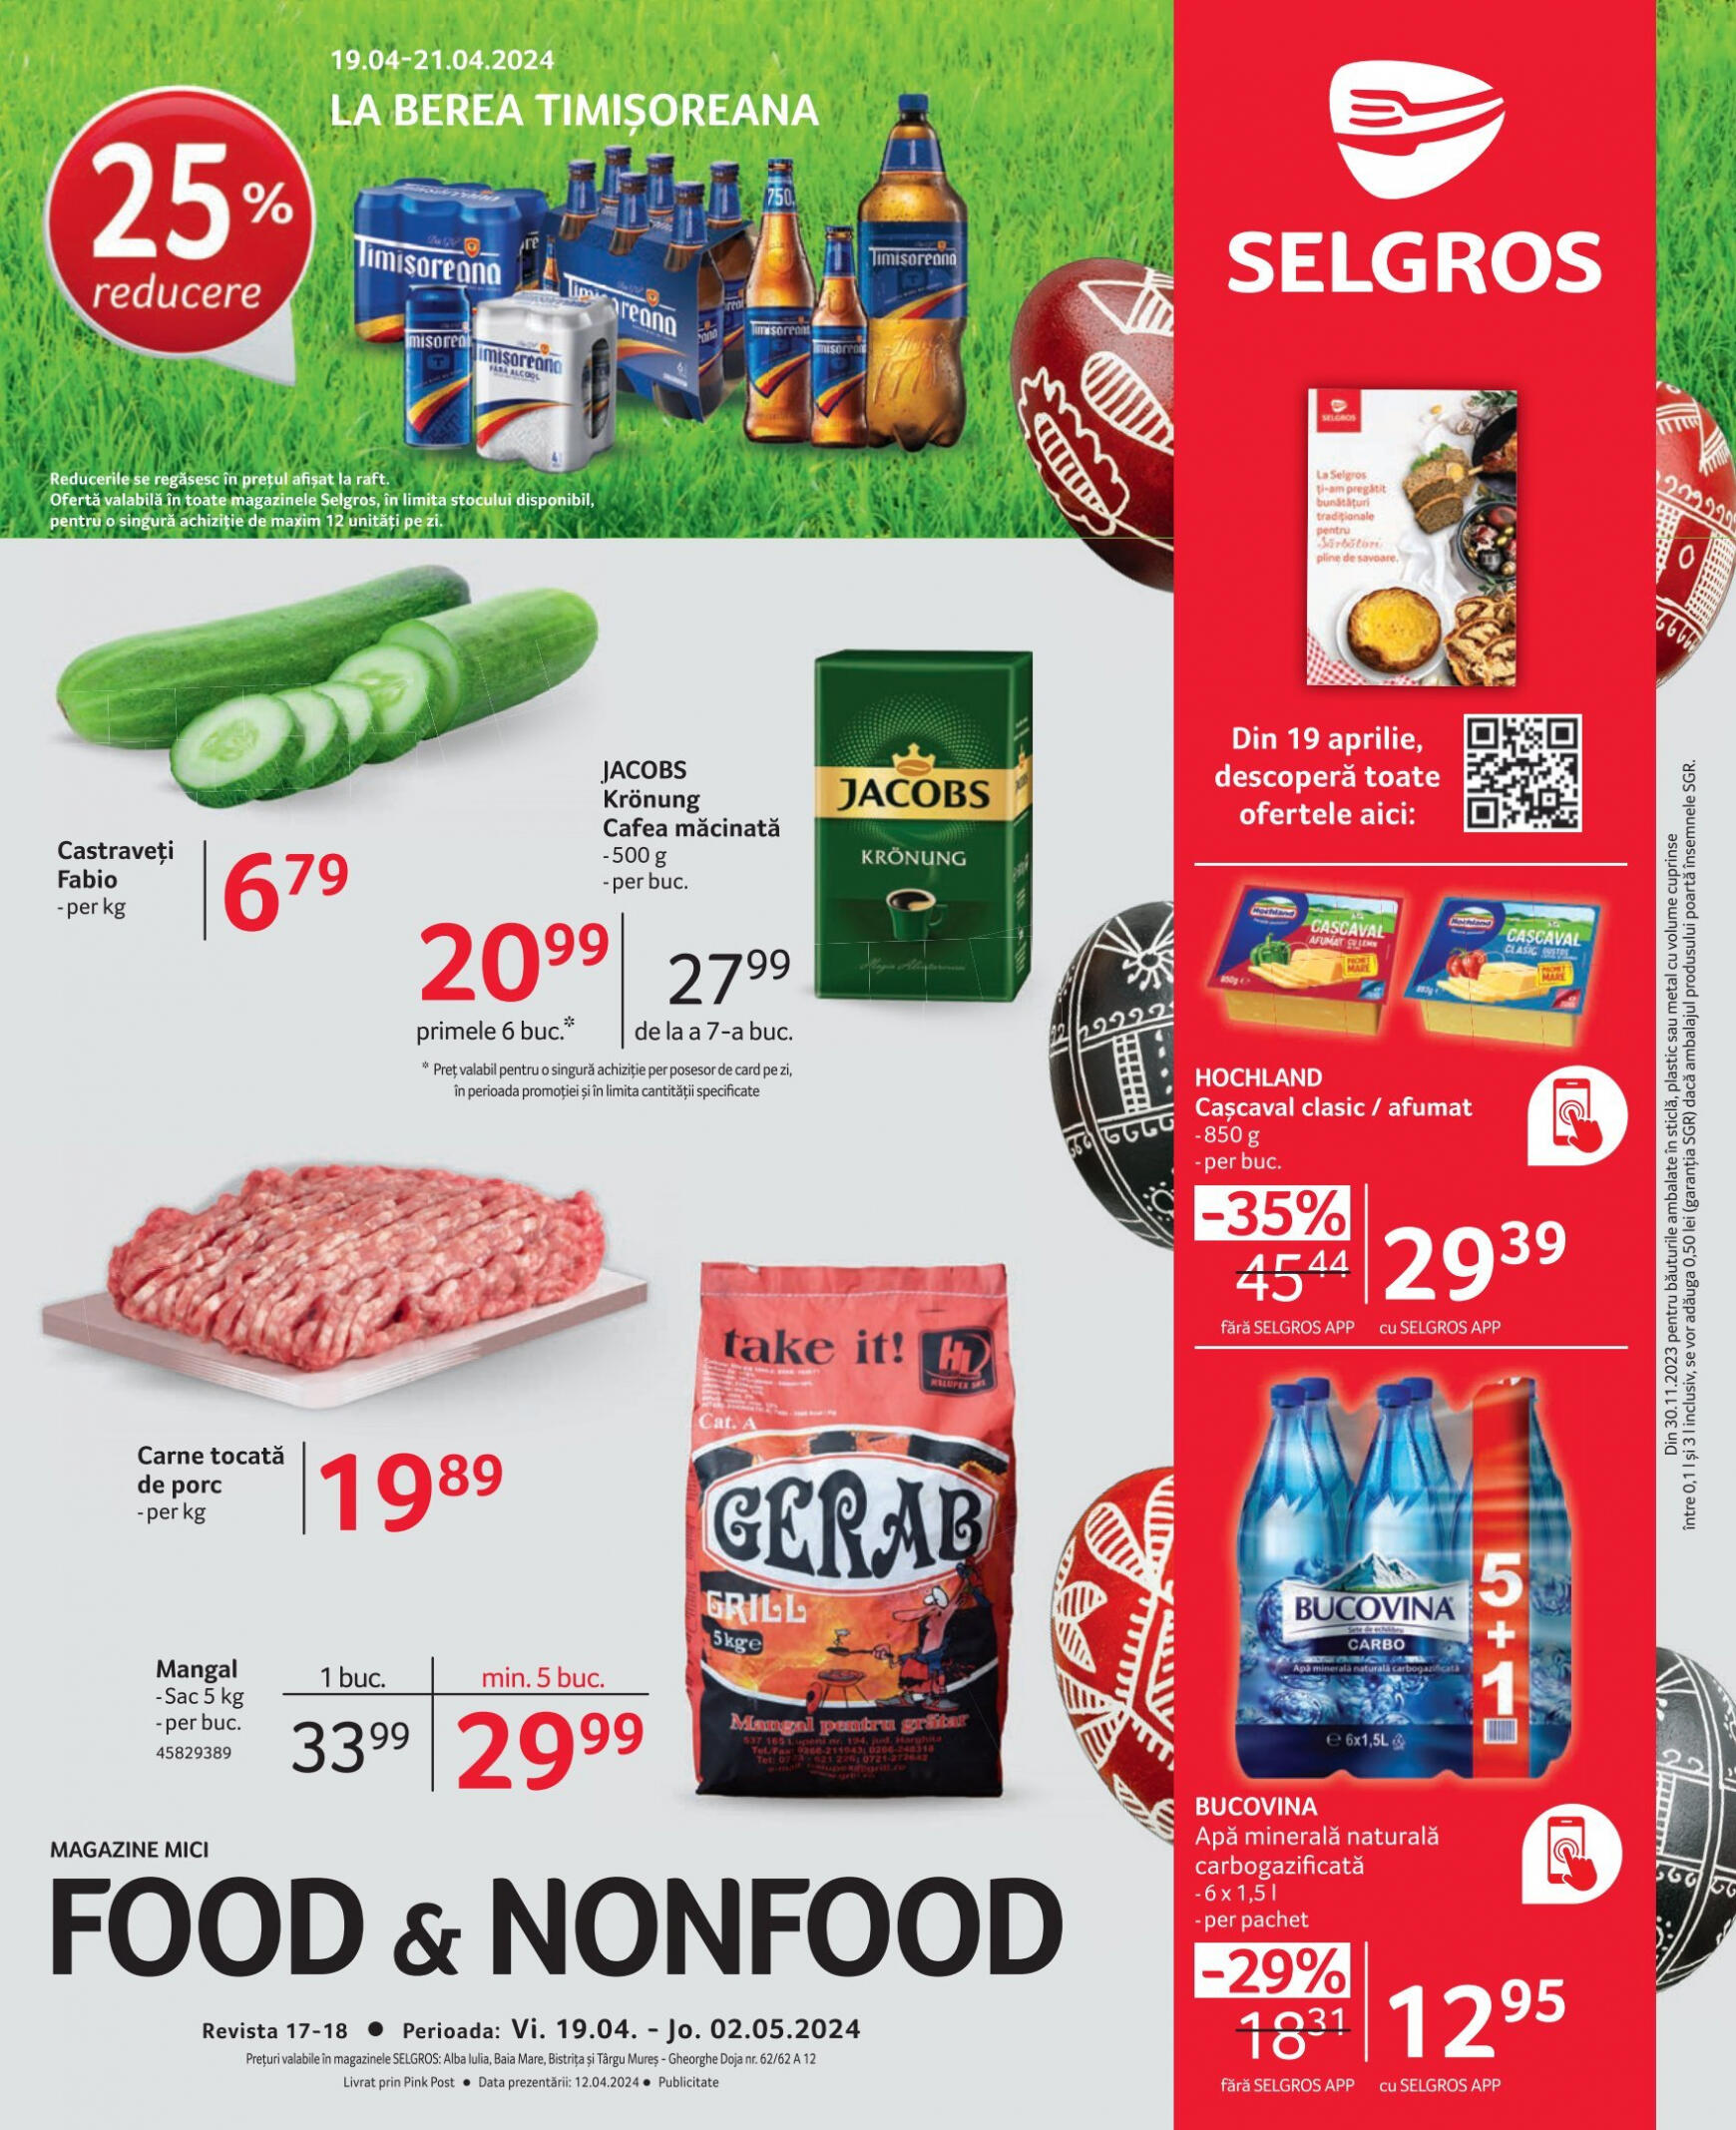 selgros - Catalog nou Selgros - Food & Nonfood 19.04. - 02.05. - page: 1